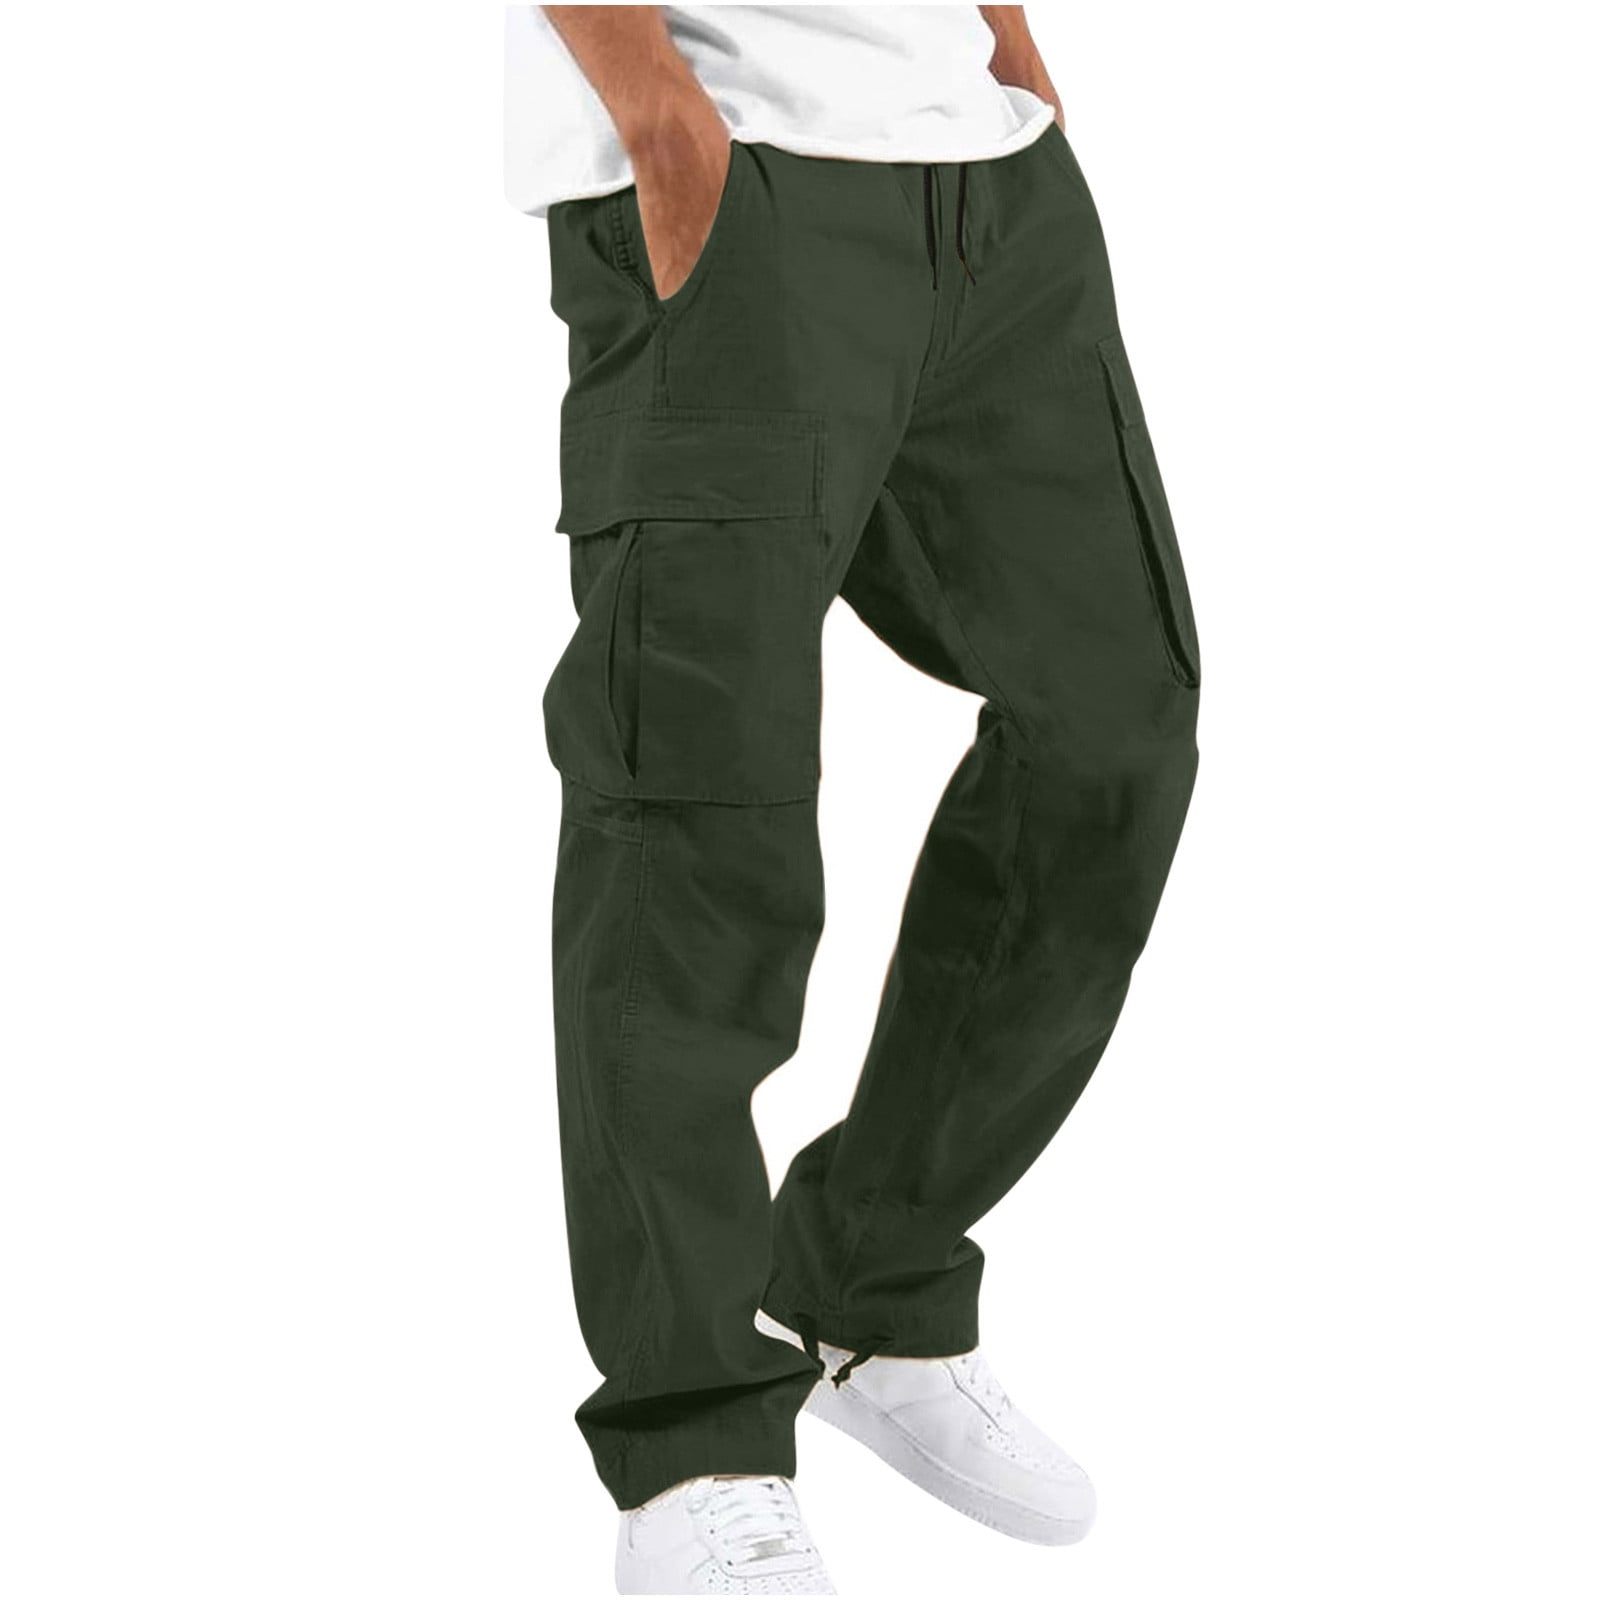 JWZUY Men's Casual Cargo Pants Hiking Pants Workout Joggers Sweatpants ...